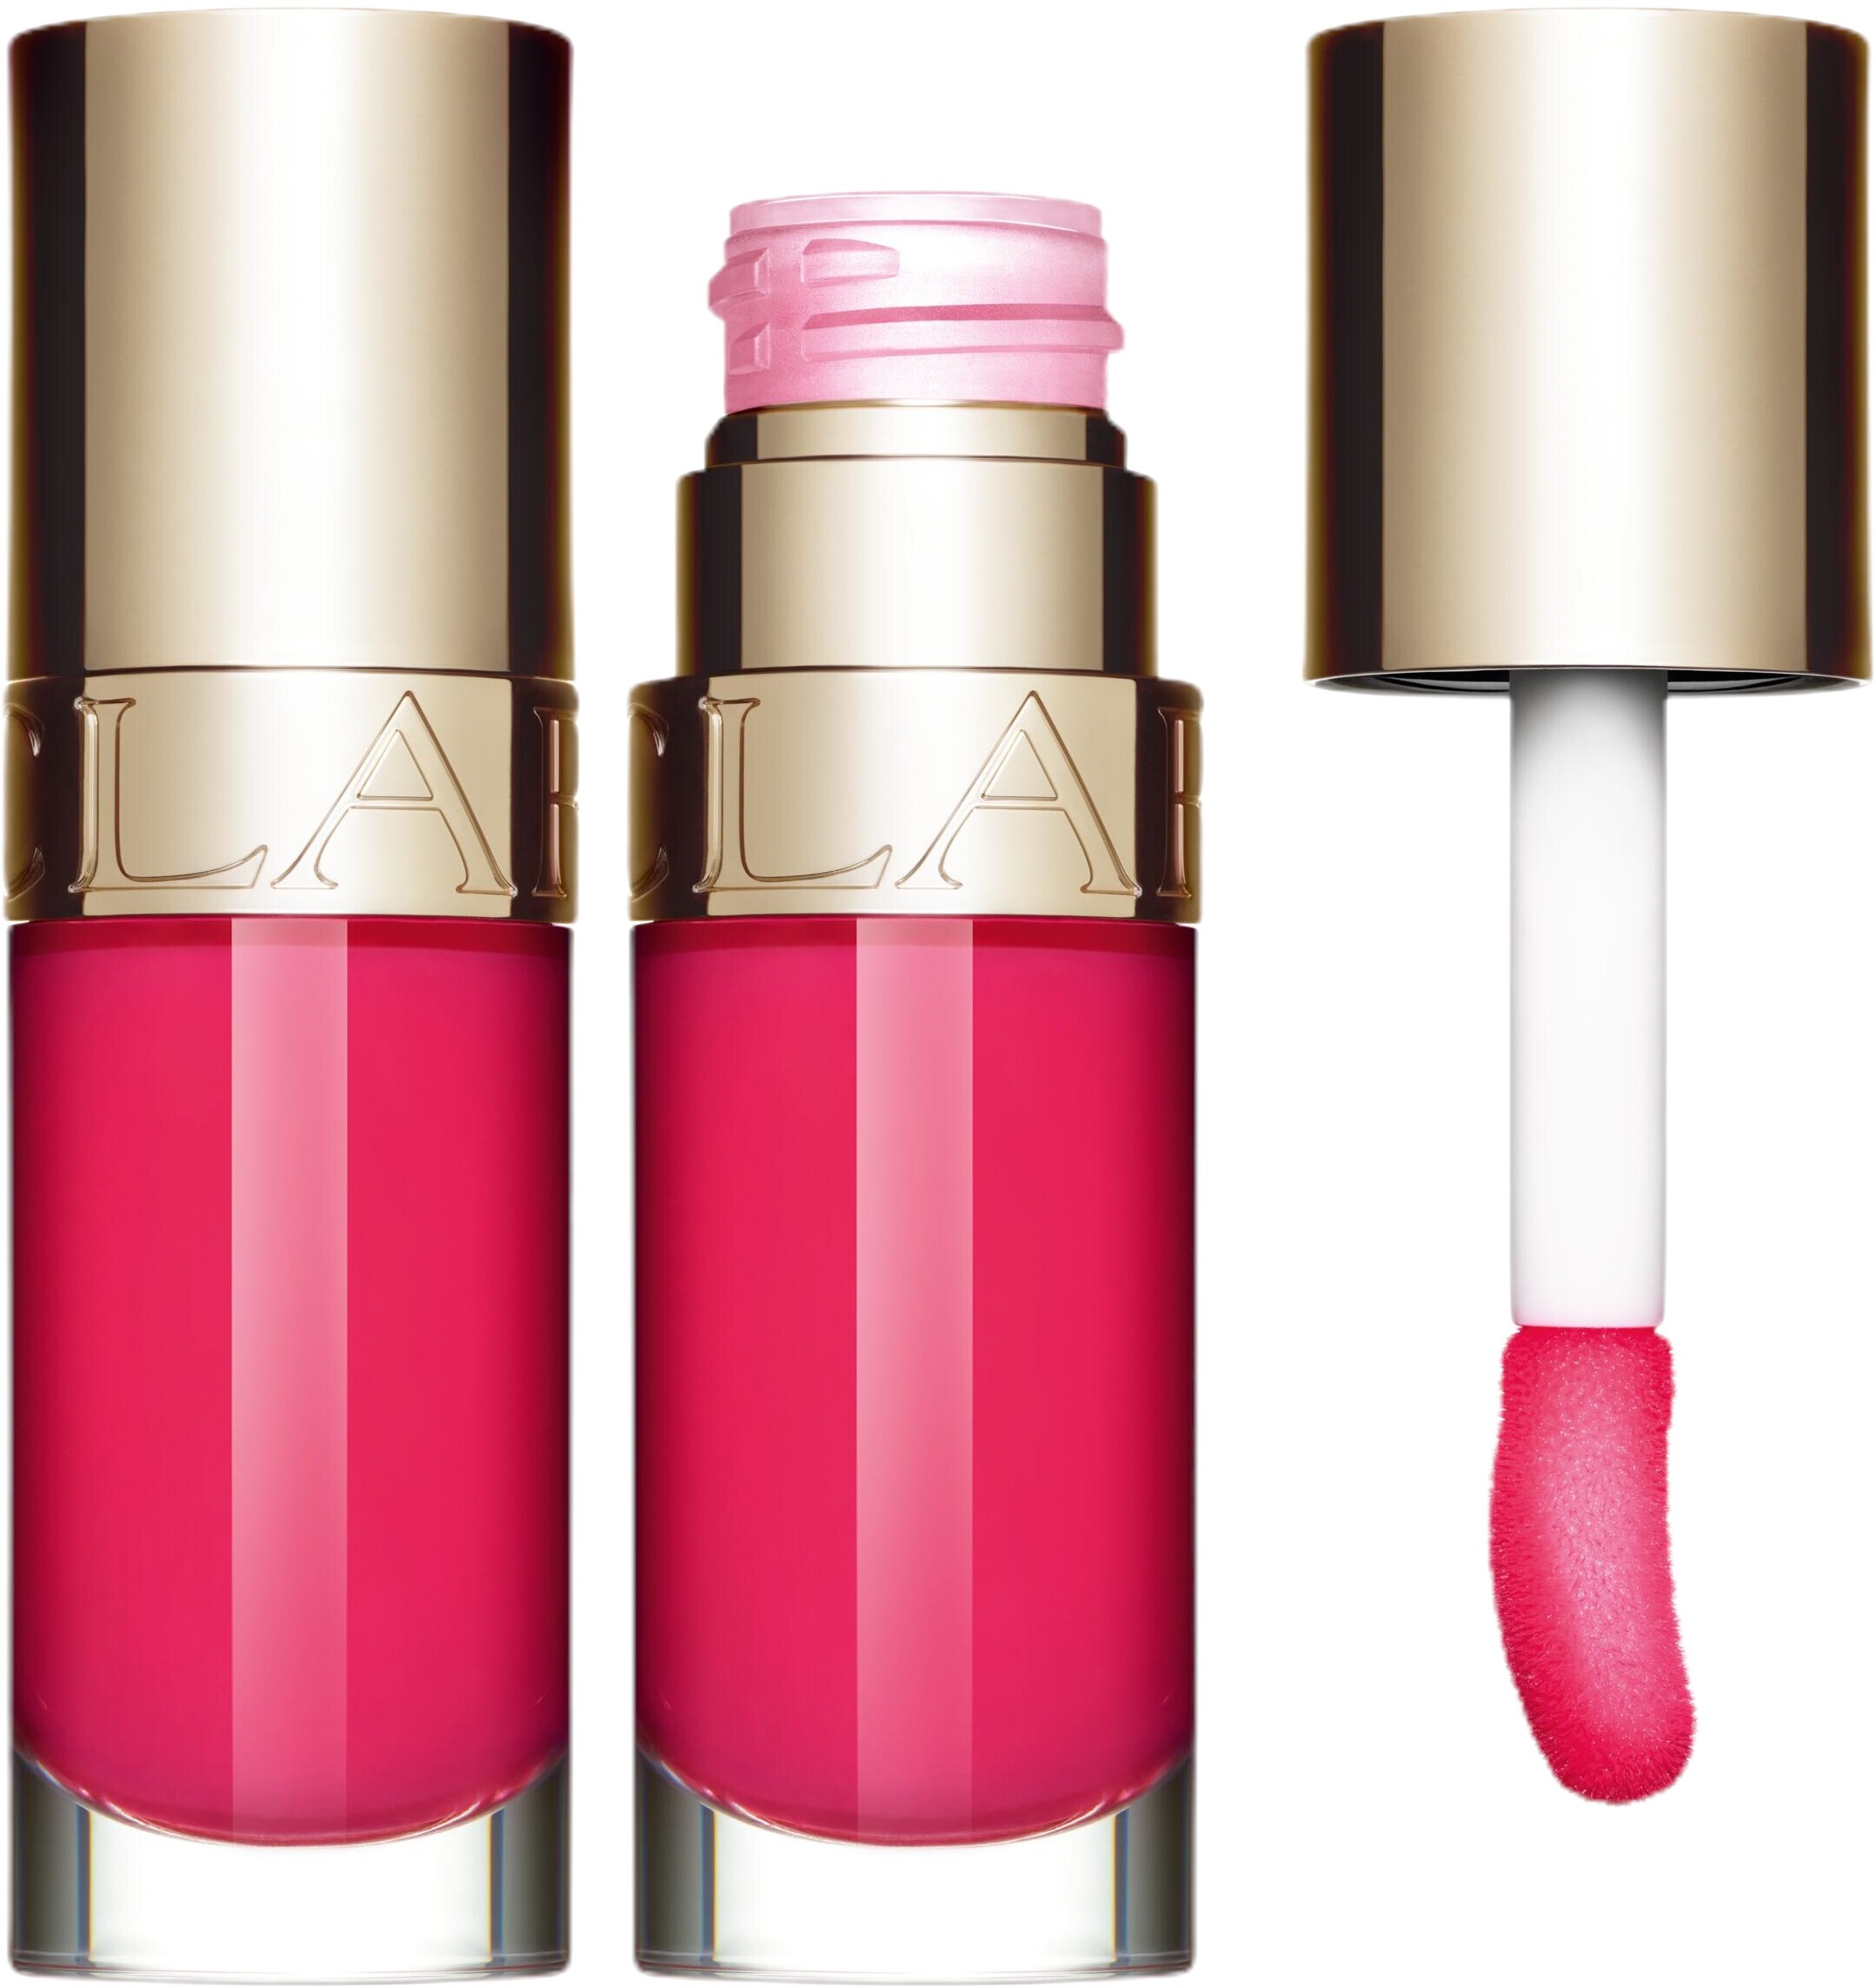 Clarins Lip Comfort Oil 7ml 23 - Passionate Pink